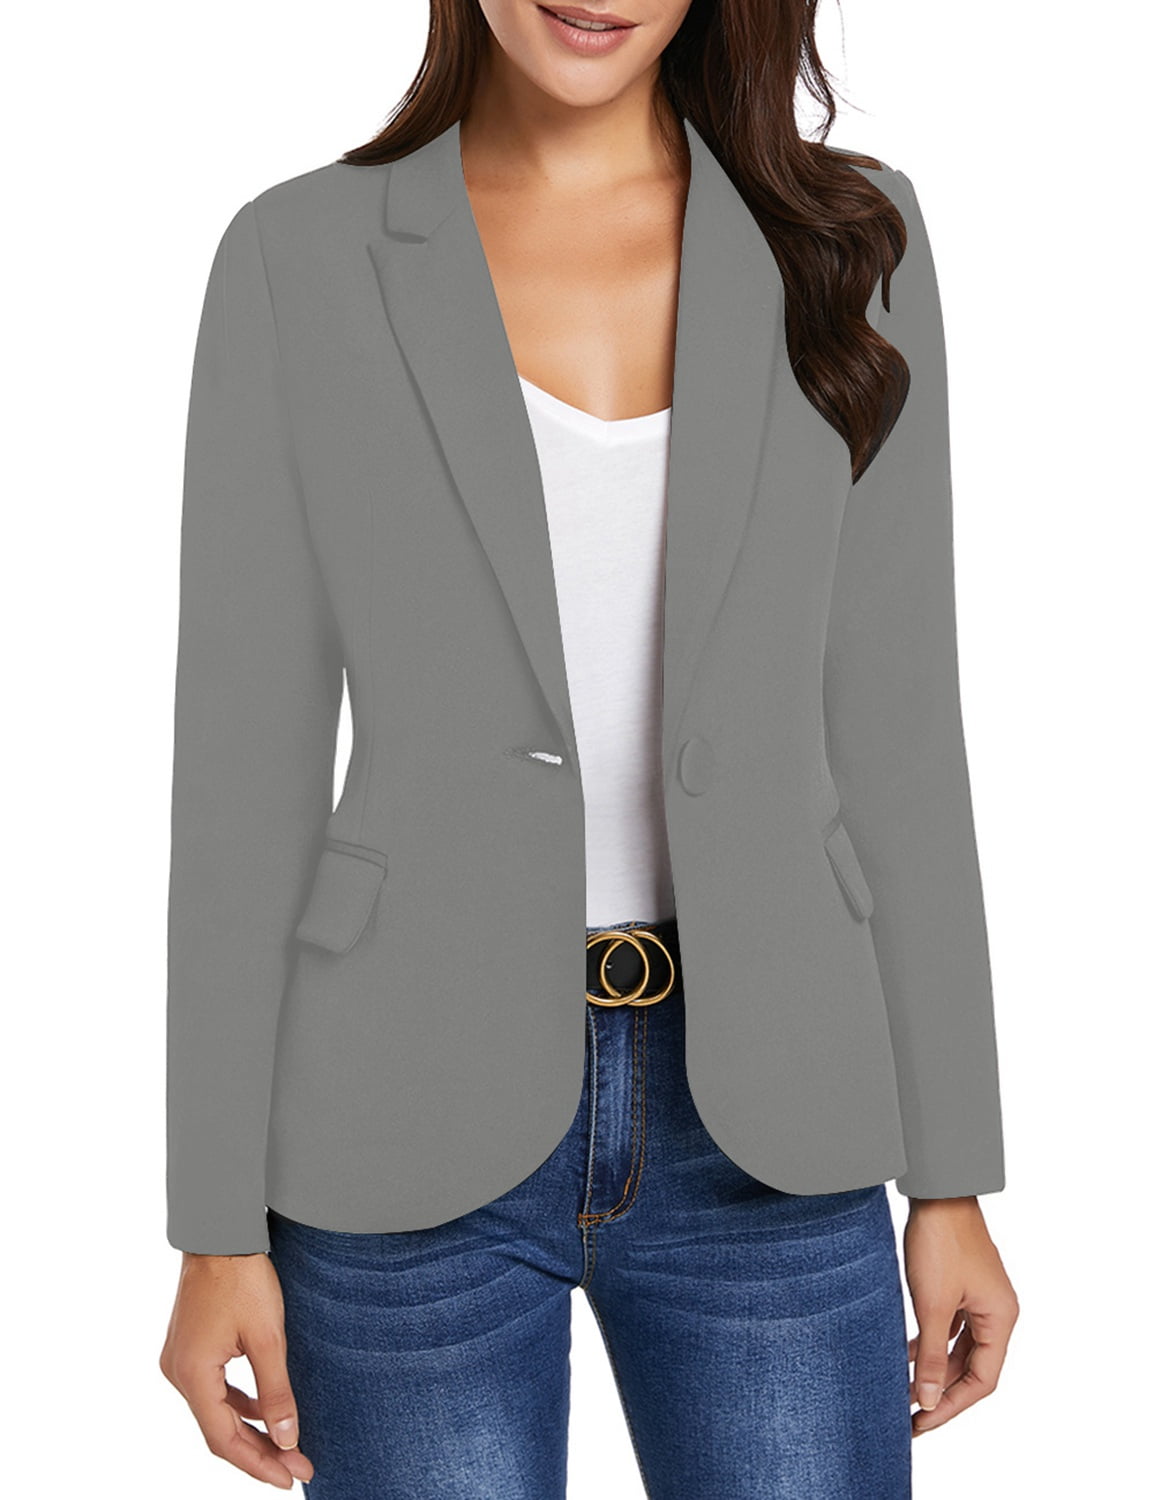 Vetinee Womens Business Work Office Blazer Back Slit Jacket with One ...